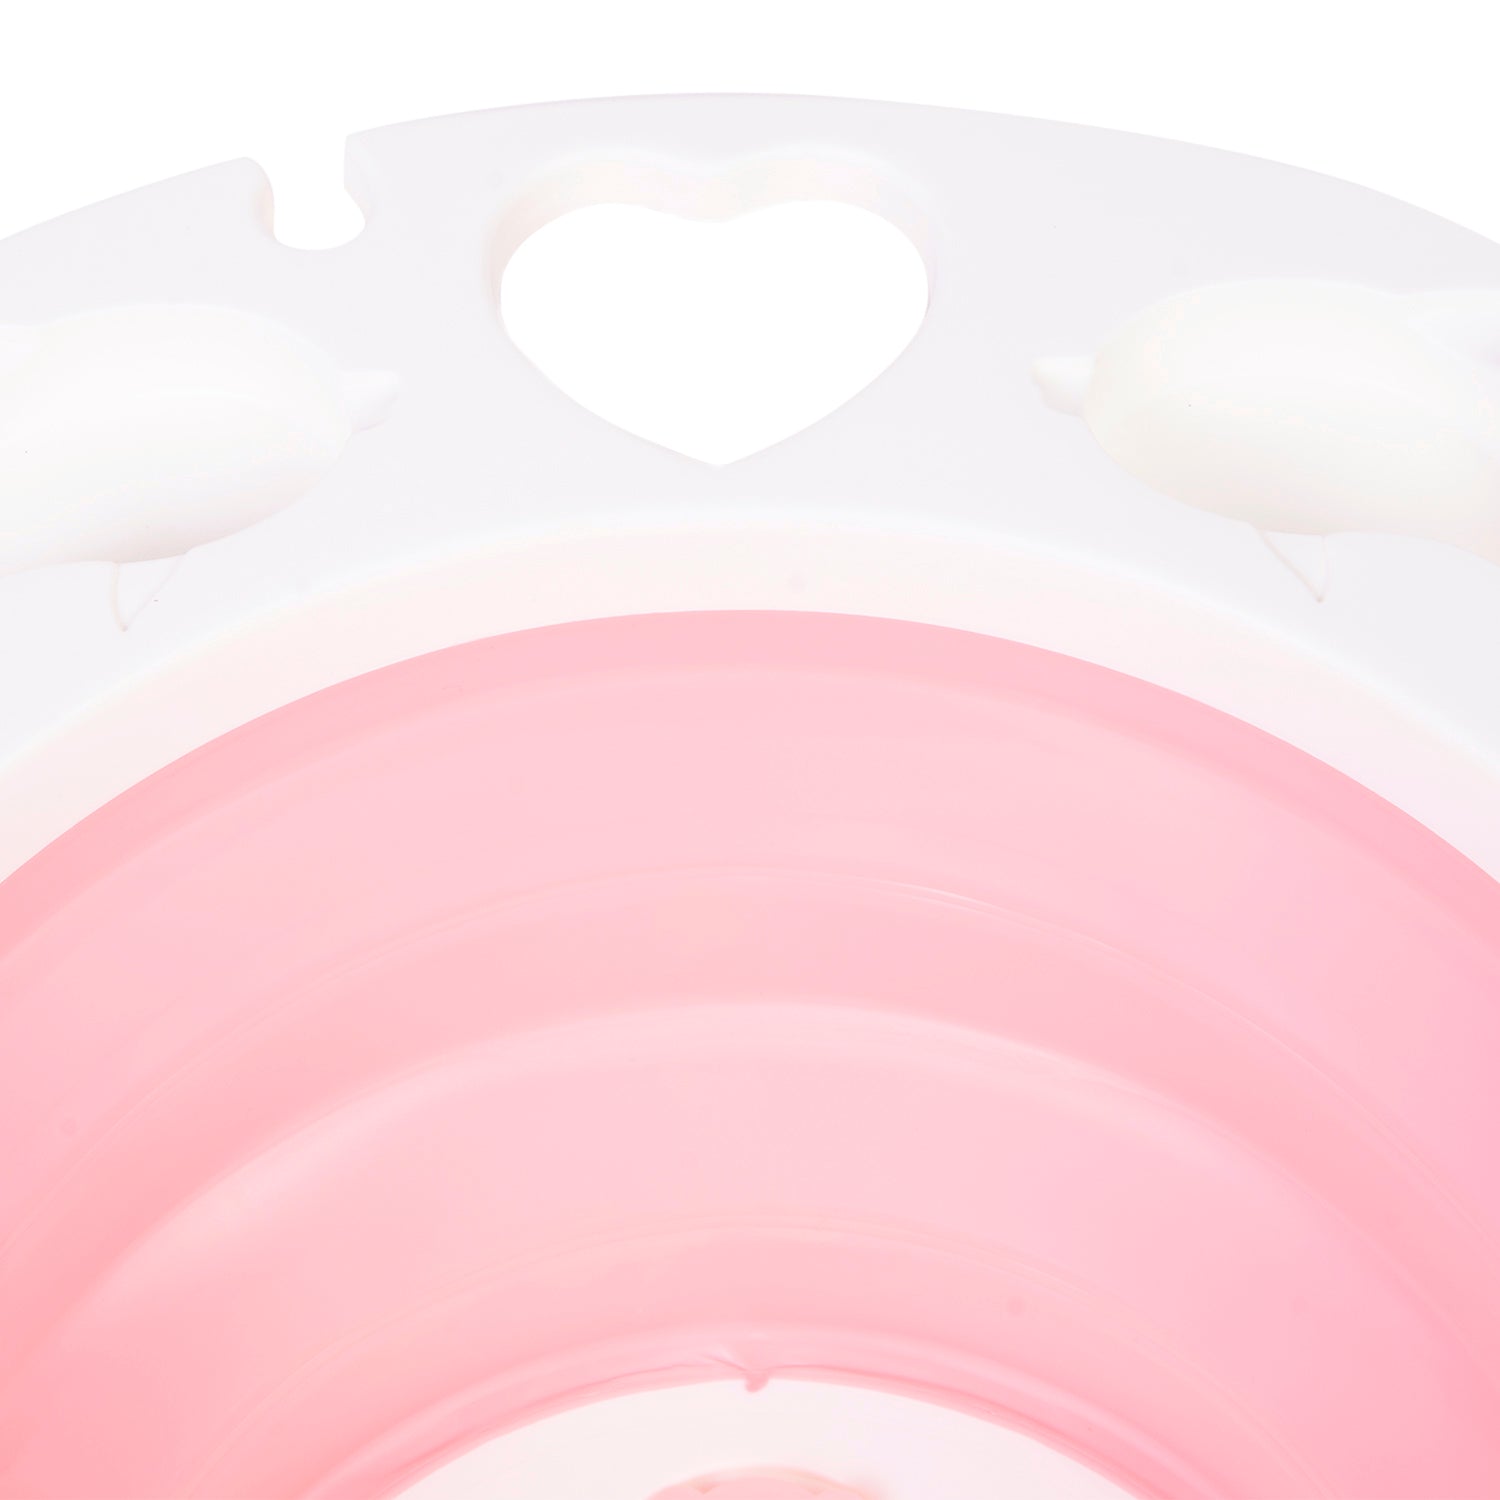 Baby Moo Portable Folding Bath Tub With Drain Plug Pink